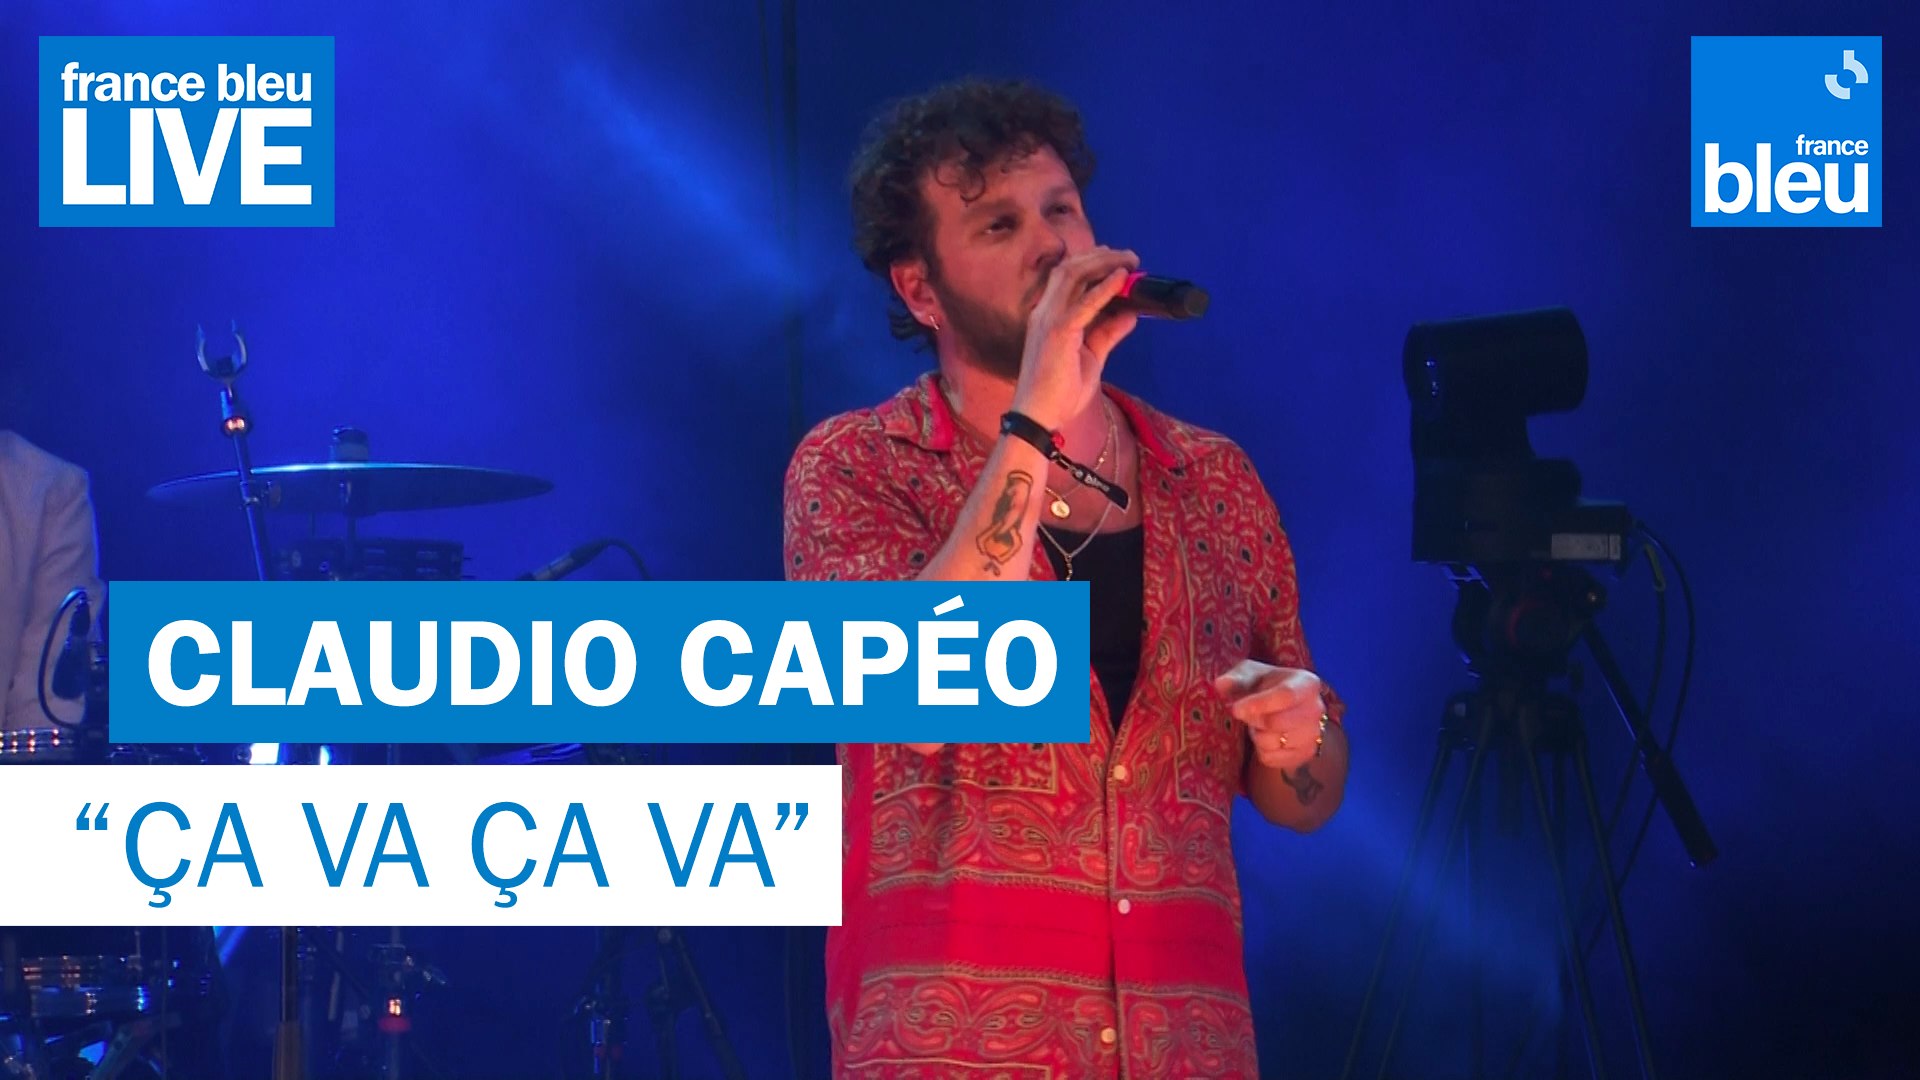 Claudio Capéo "Ça va ça va" - France Bleu Live - Vidéo Dailymotion